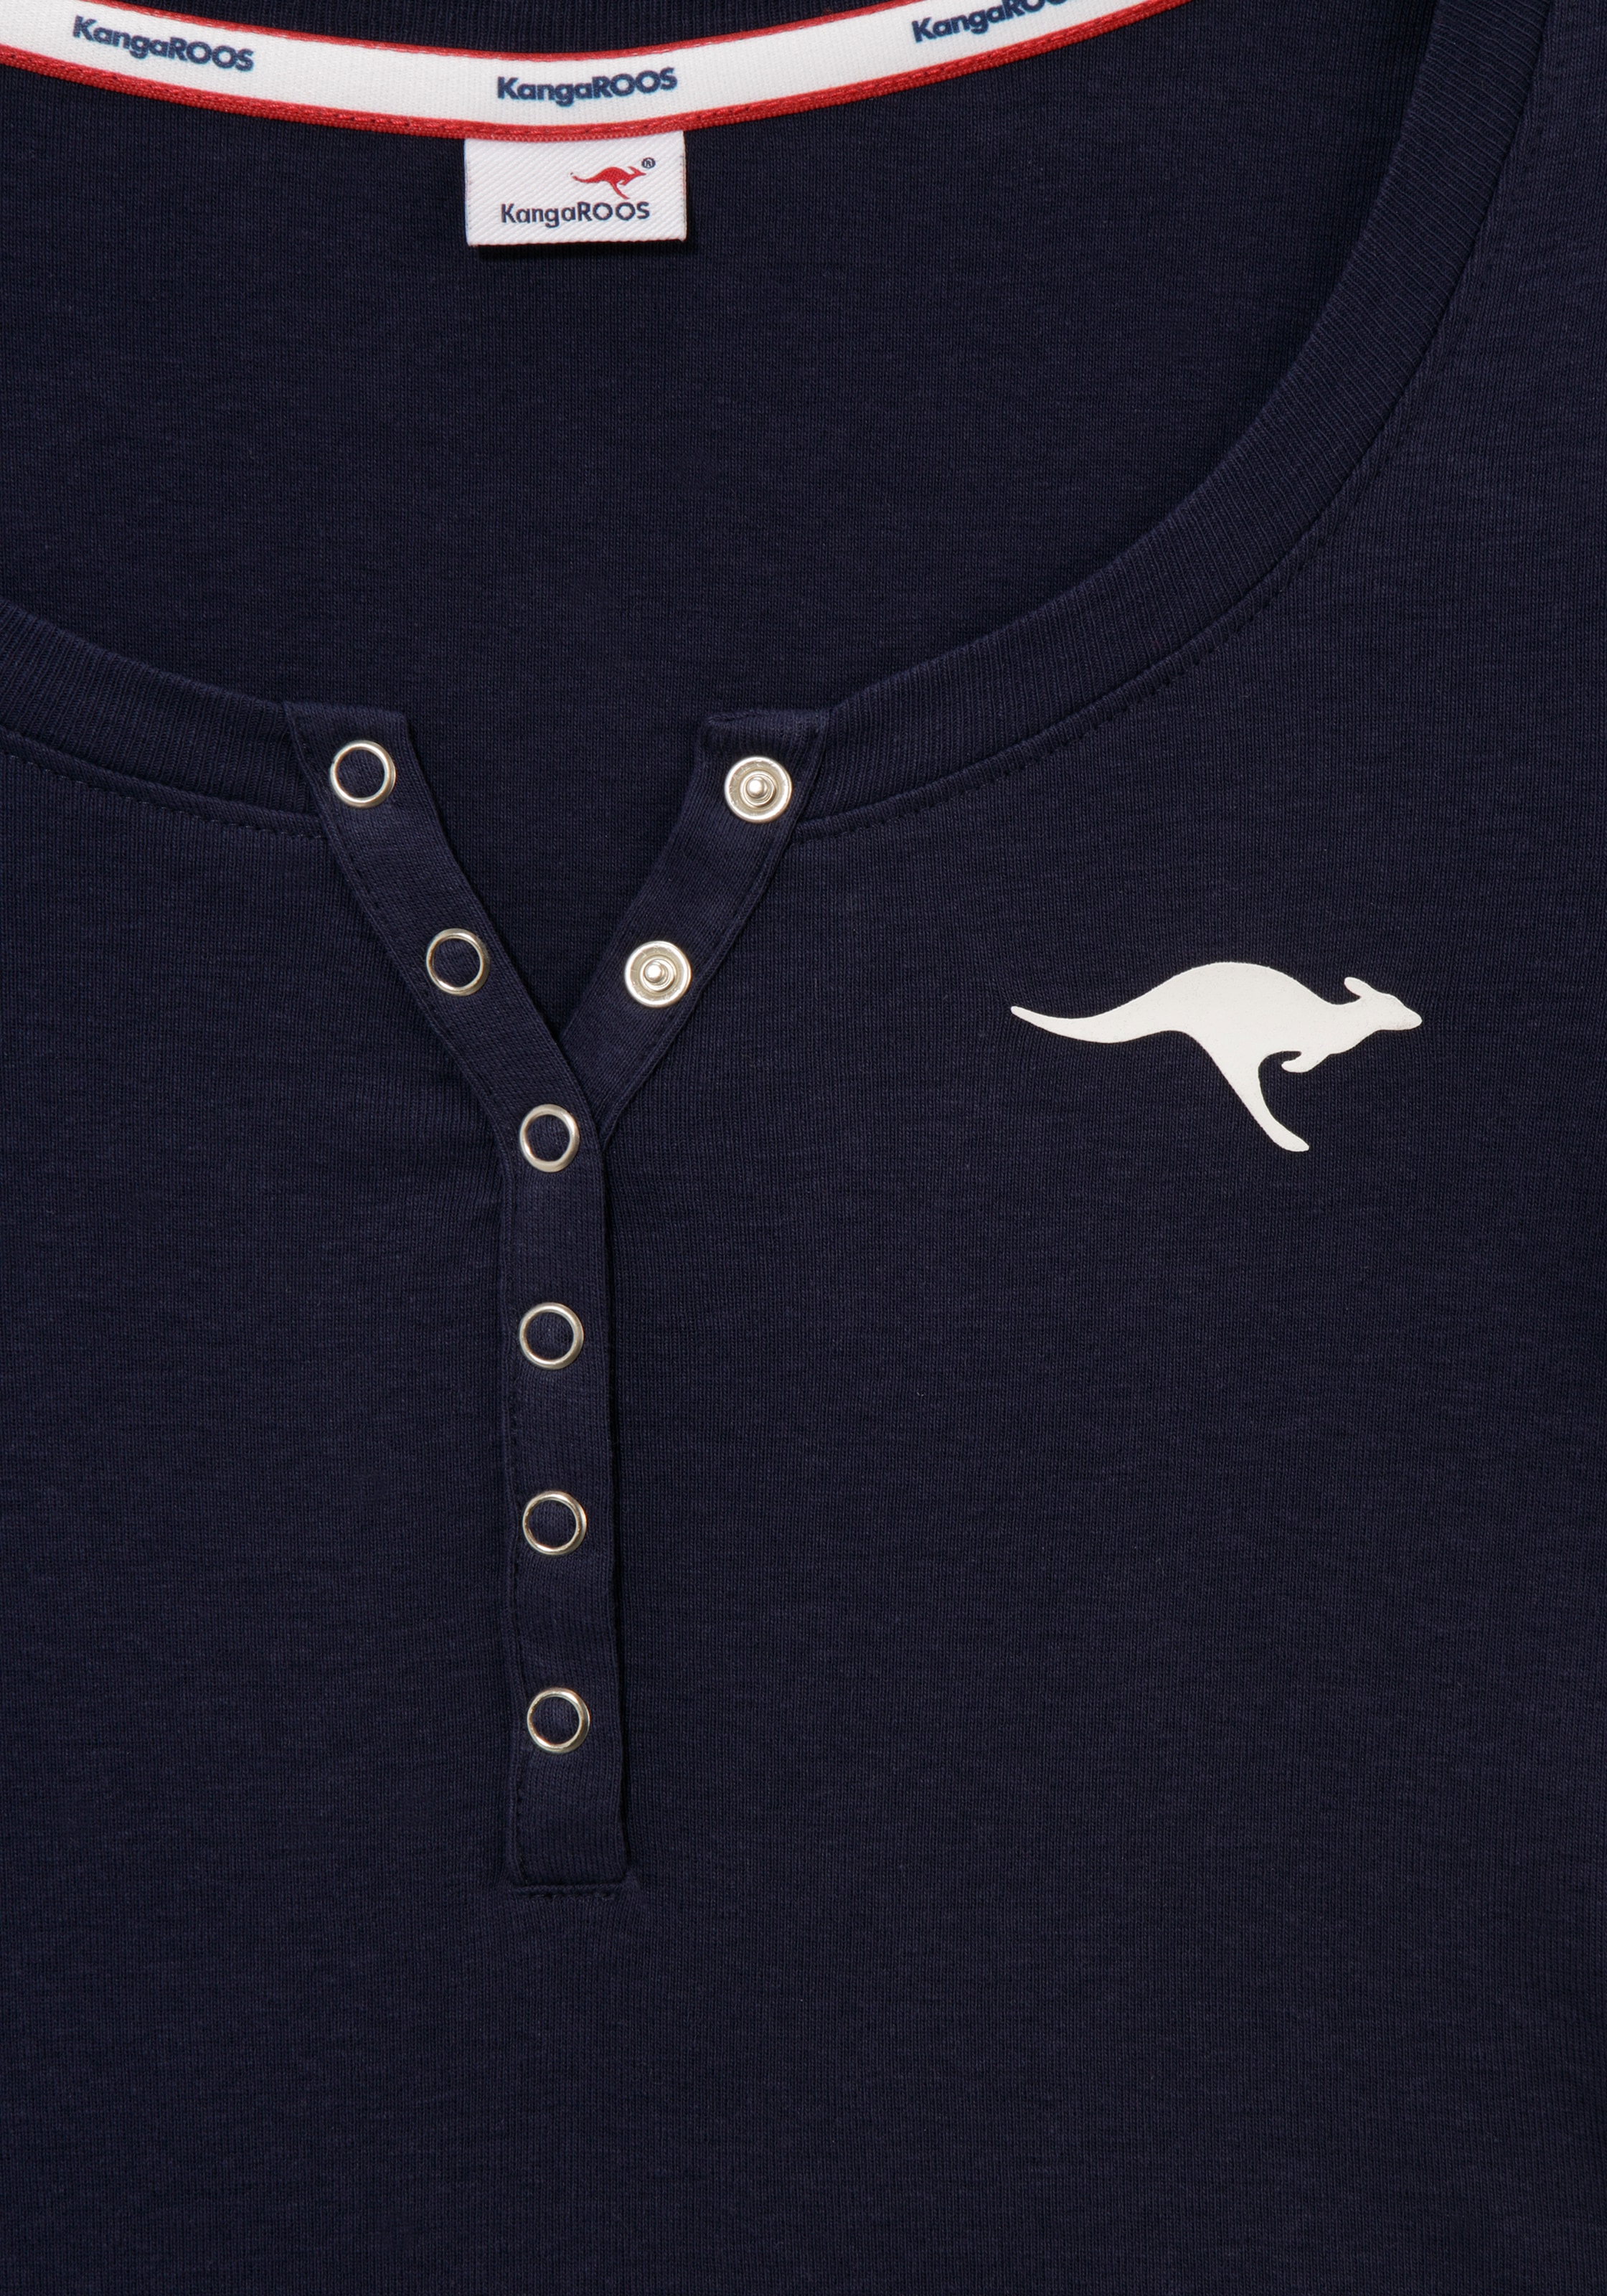 Black Friday KangaROOS Langarmshirt, mit Känguru-Logodruck Knopfleiste BAUR und 